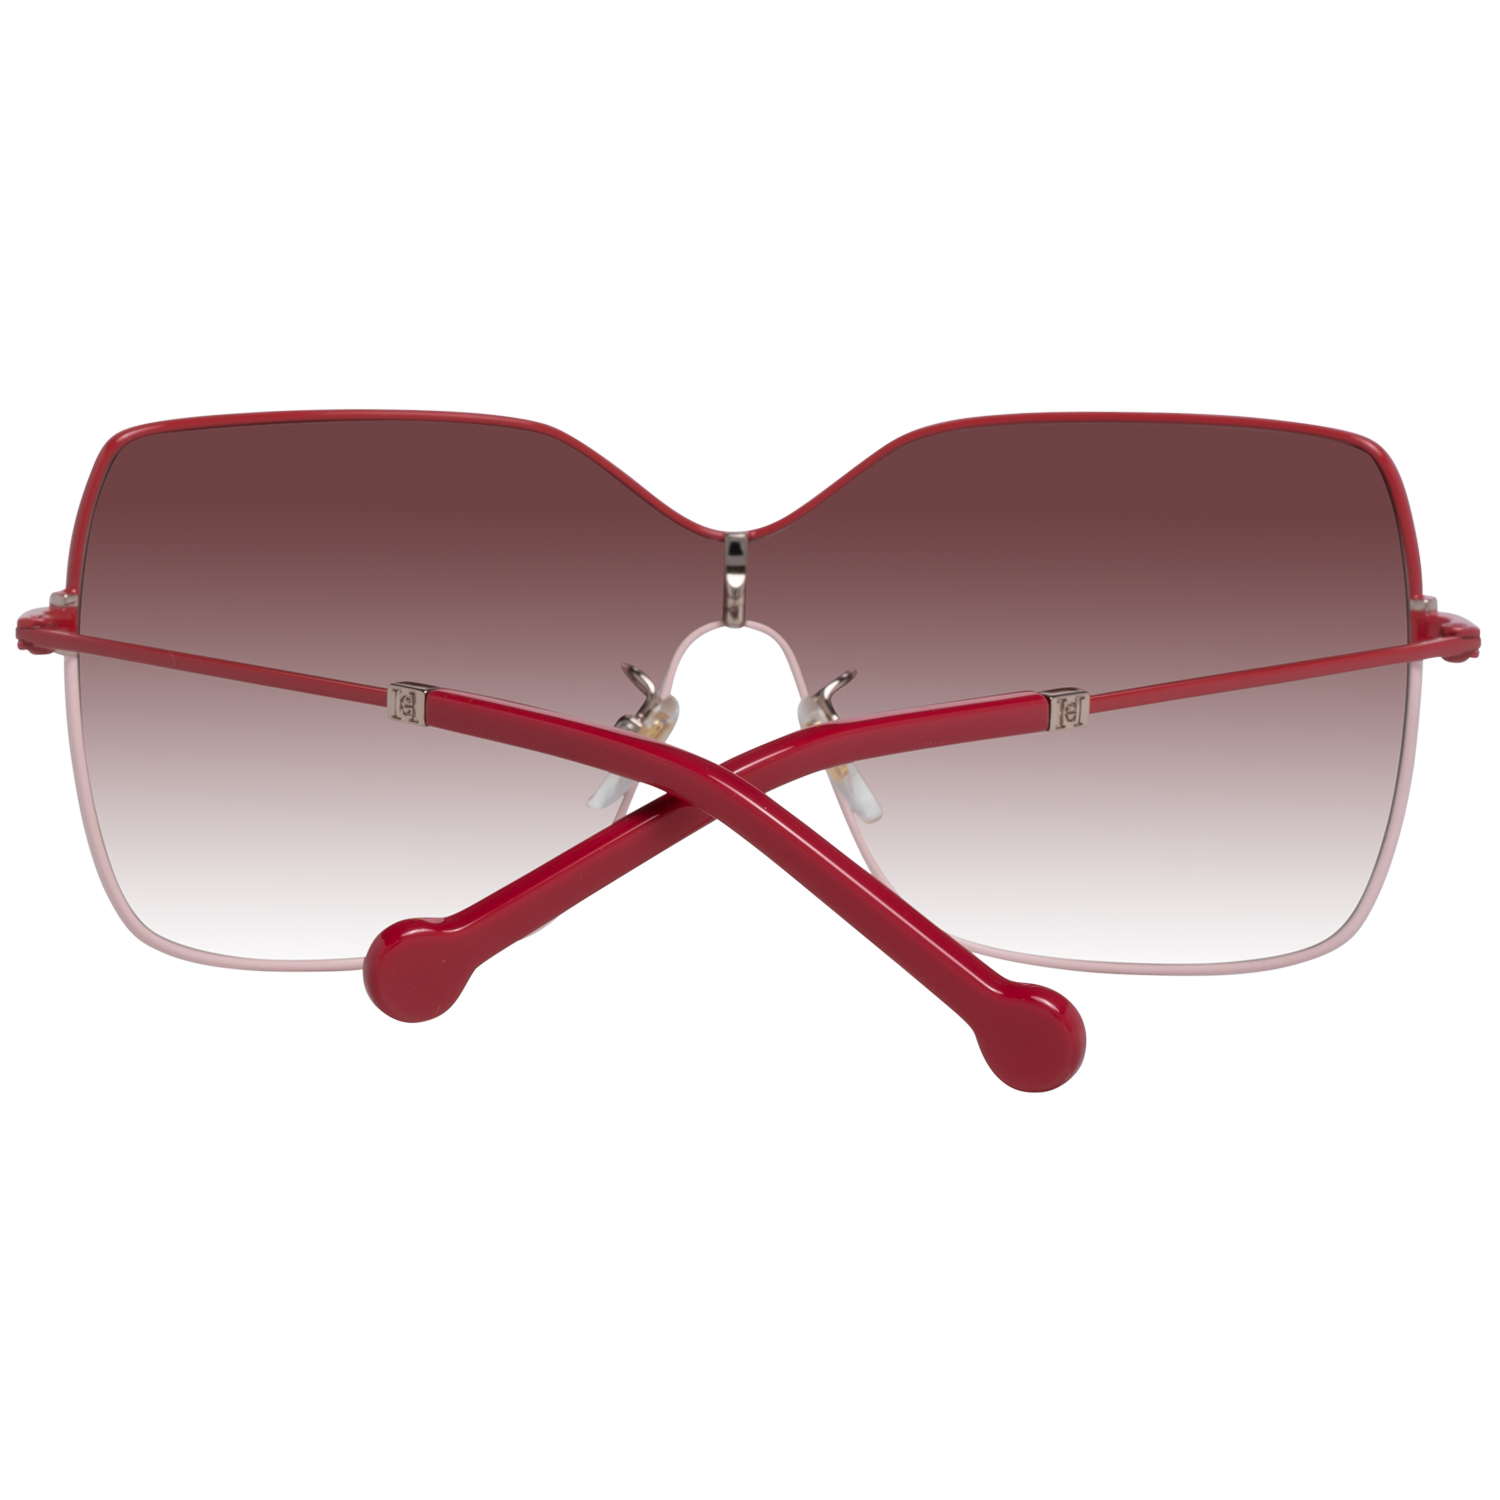 Carolina Herrera Sunglasses Carolina Herrera Sunglasses SHE175 H60 99 Eyeglasses Eyewear UK USA Australia 